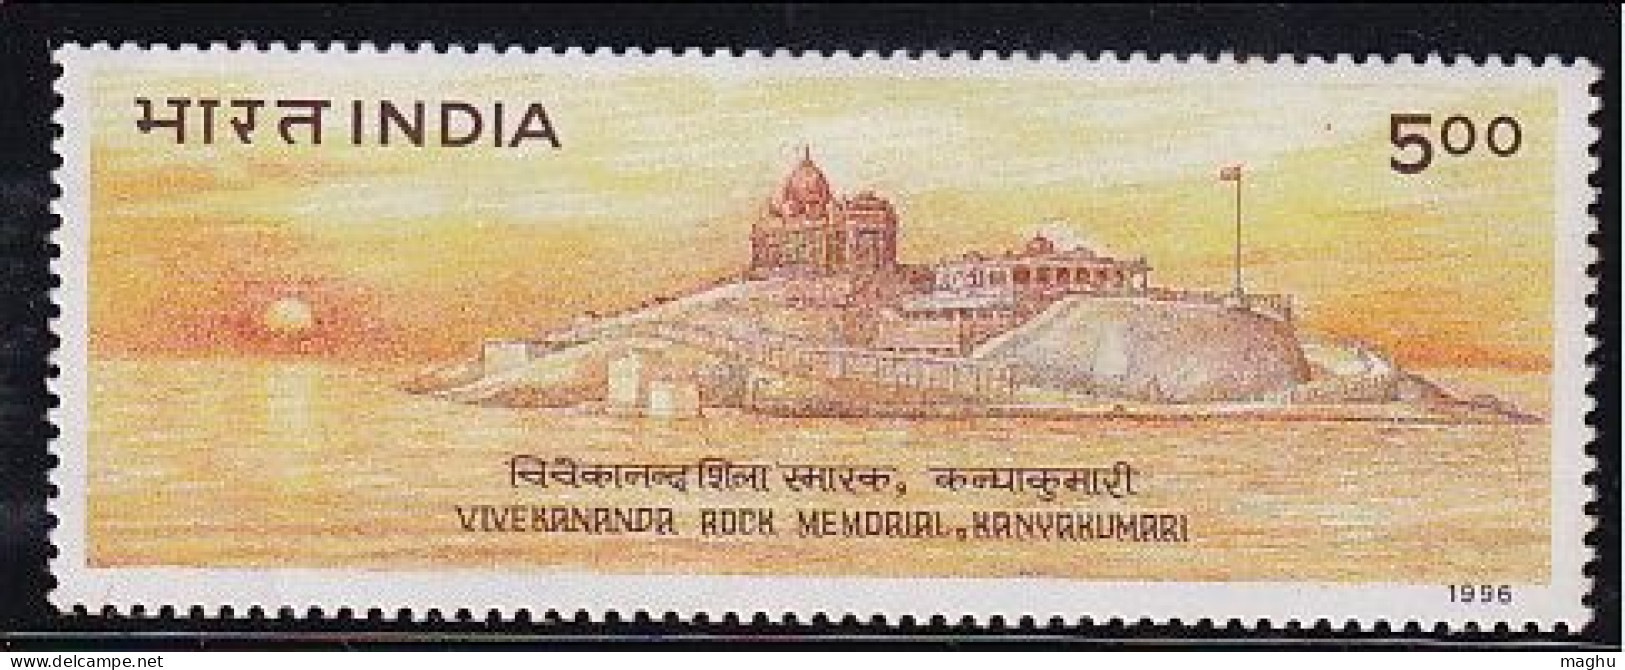 India MNH 1996, Vivekananda Rock Memorial, Kanyakumari, Flag, Sun, Astronomy, Cond.,stains - Unused Stamps